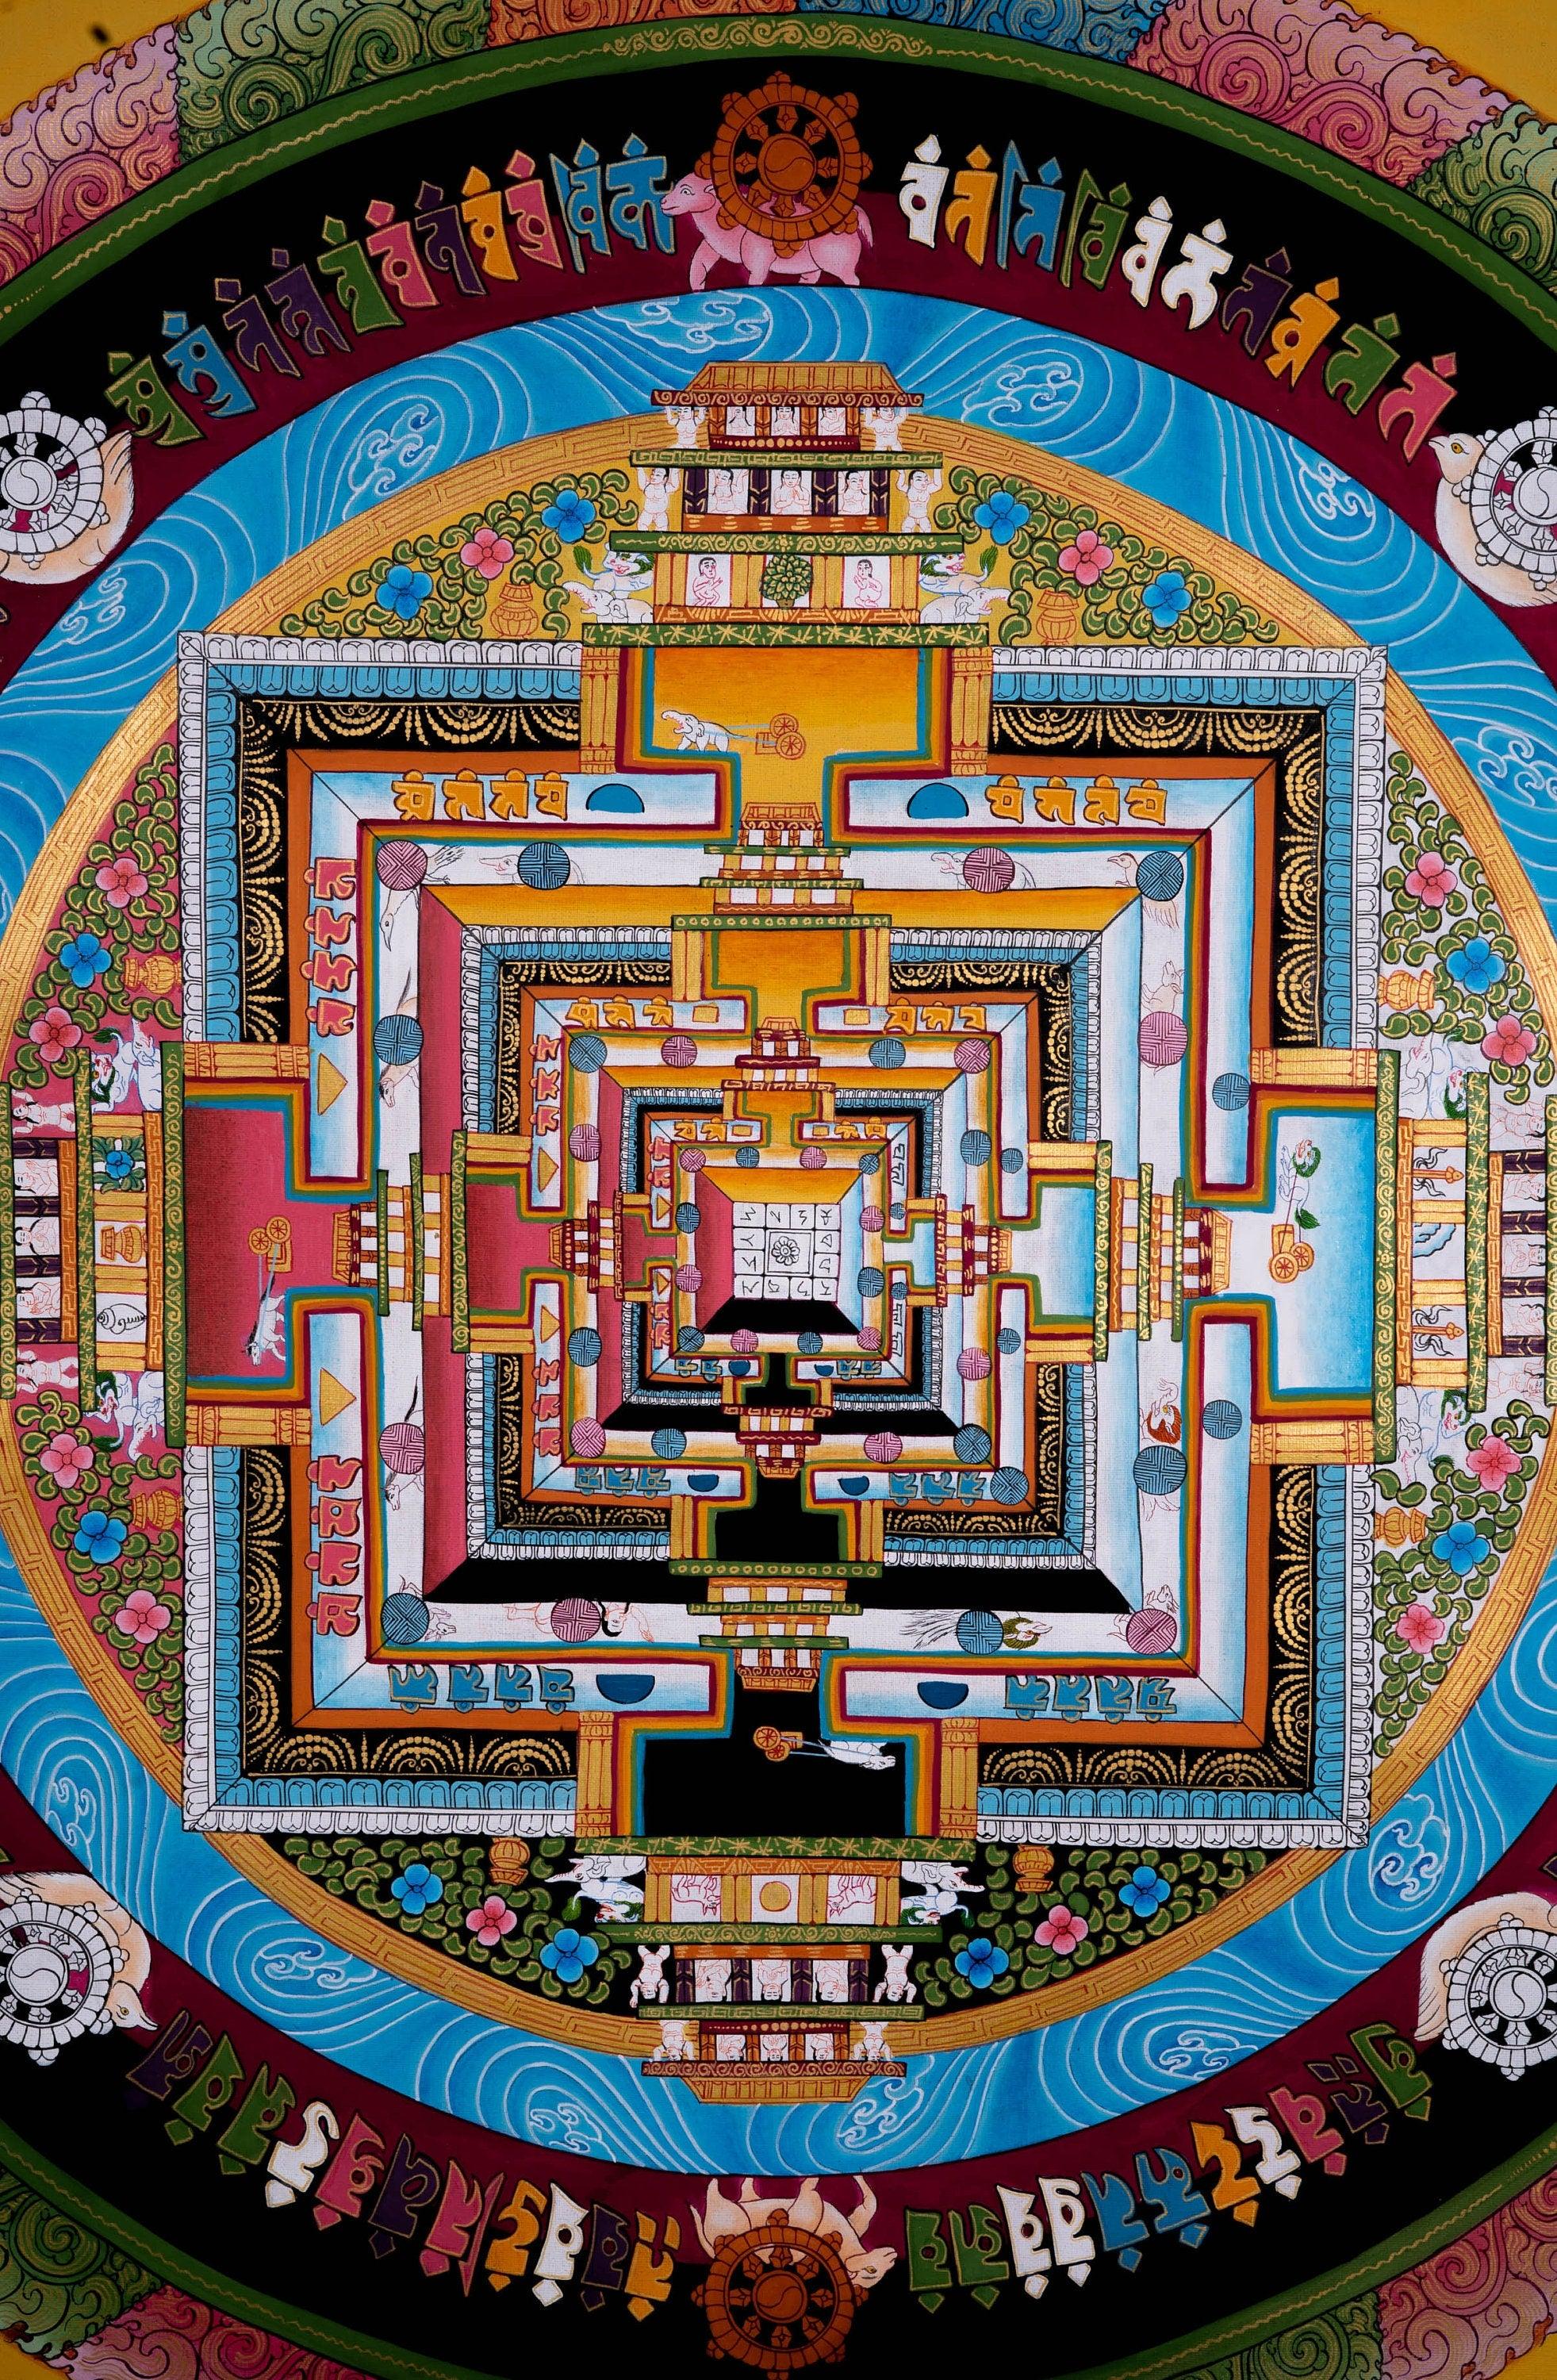 Kalchakra Mandala Thangka Art For Meditational Practice and Spiritual Gifts